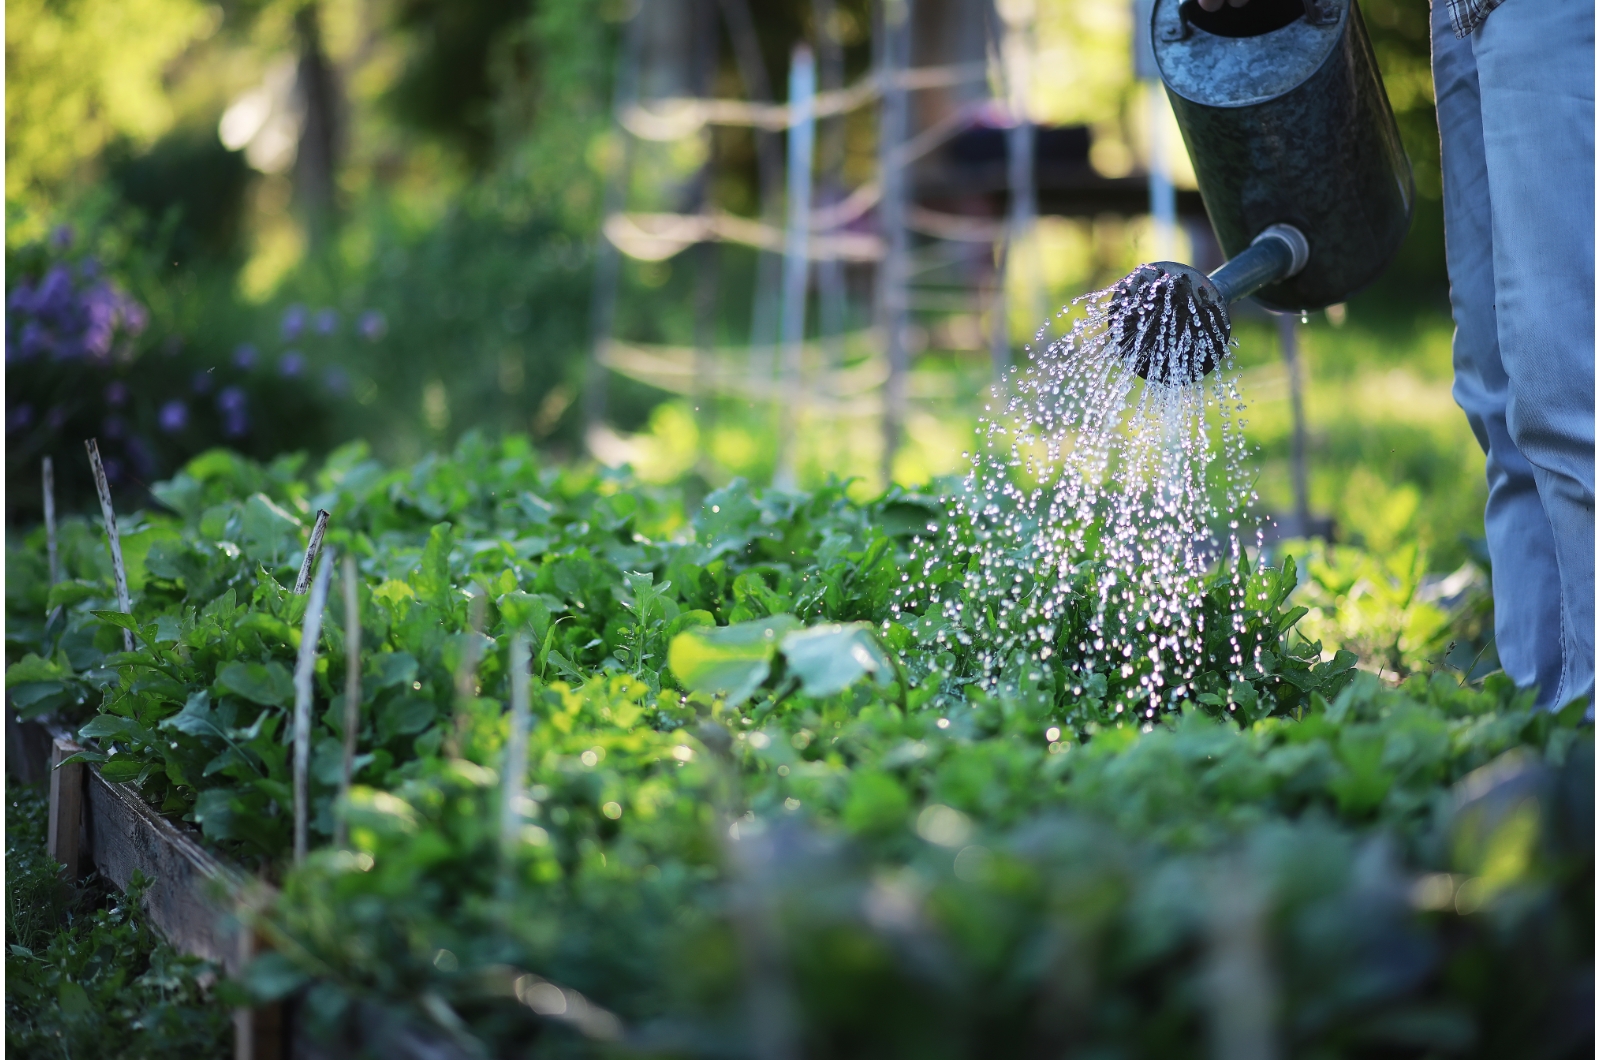 farmer watering vegetable garden